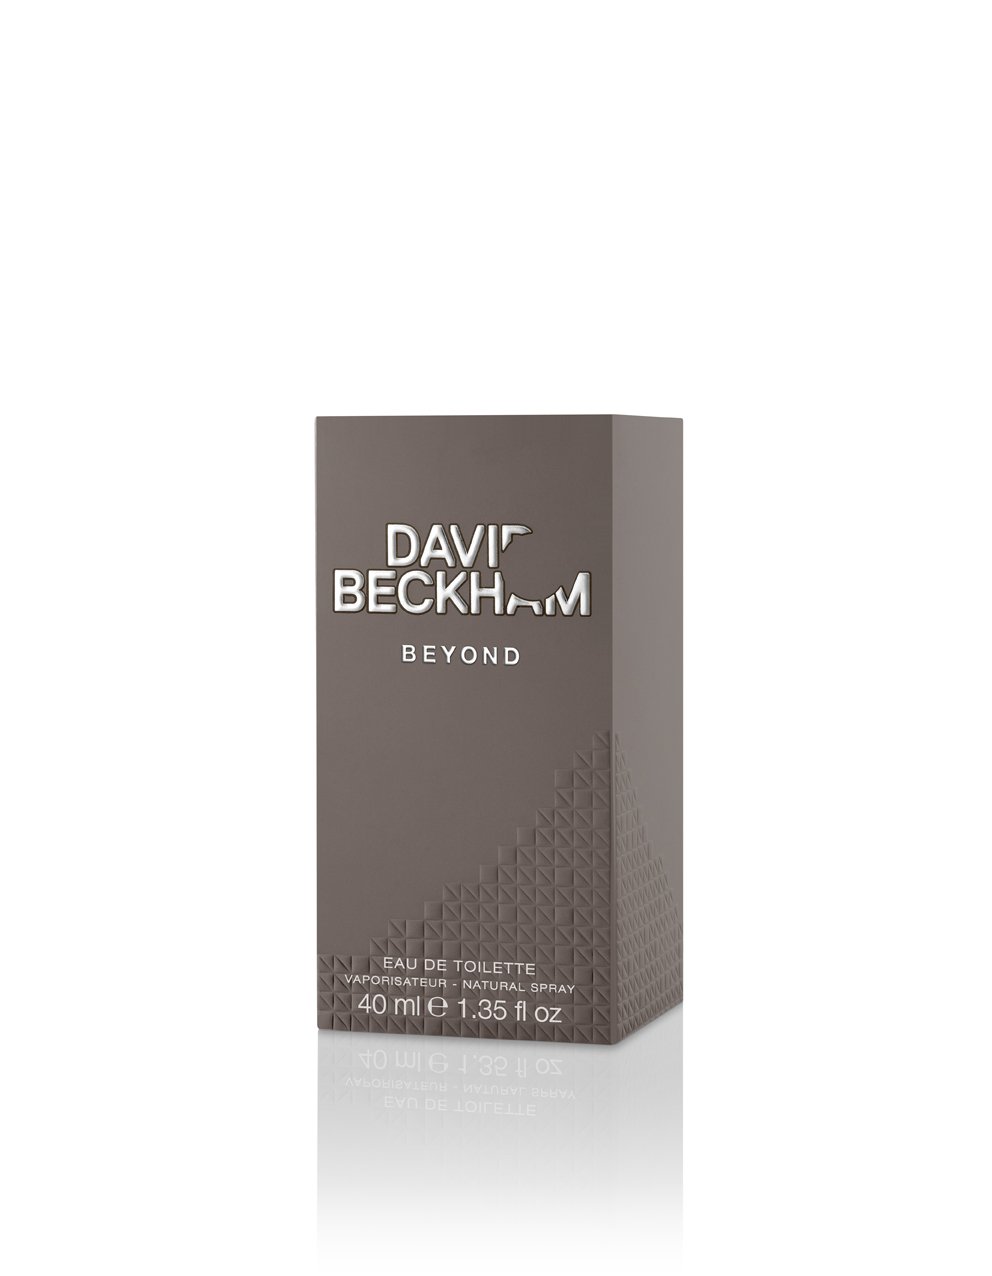 David Beckham Beyond for Men 1.35 oz Eau de Toilette Spray - image 2 of 3